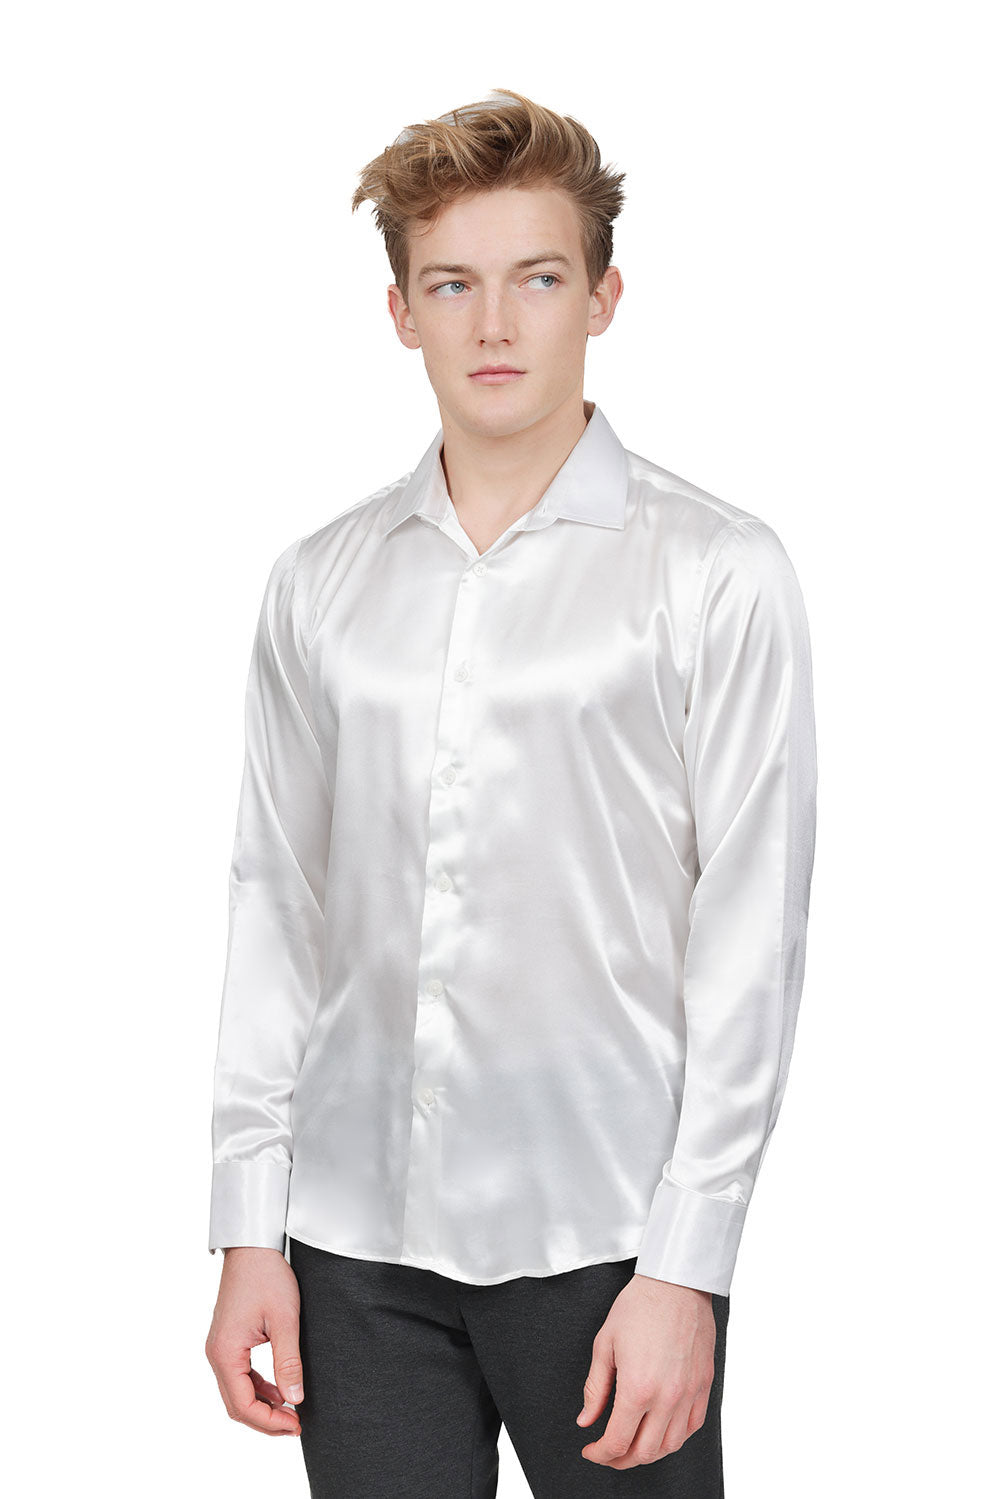 BARABAS Mens Luxury Metallic Long Sleeve Button Down Shiny shirts B312 White